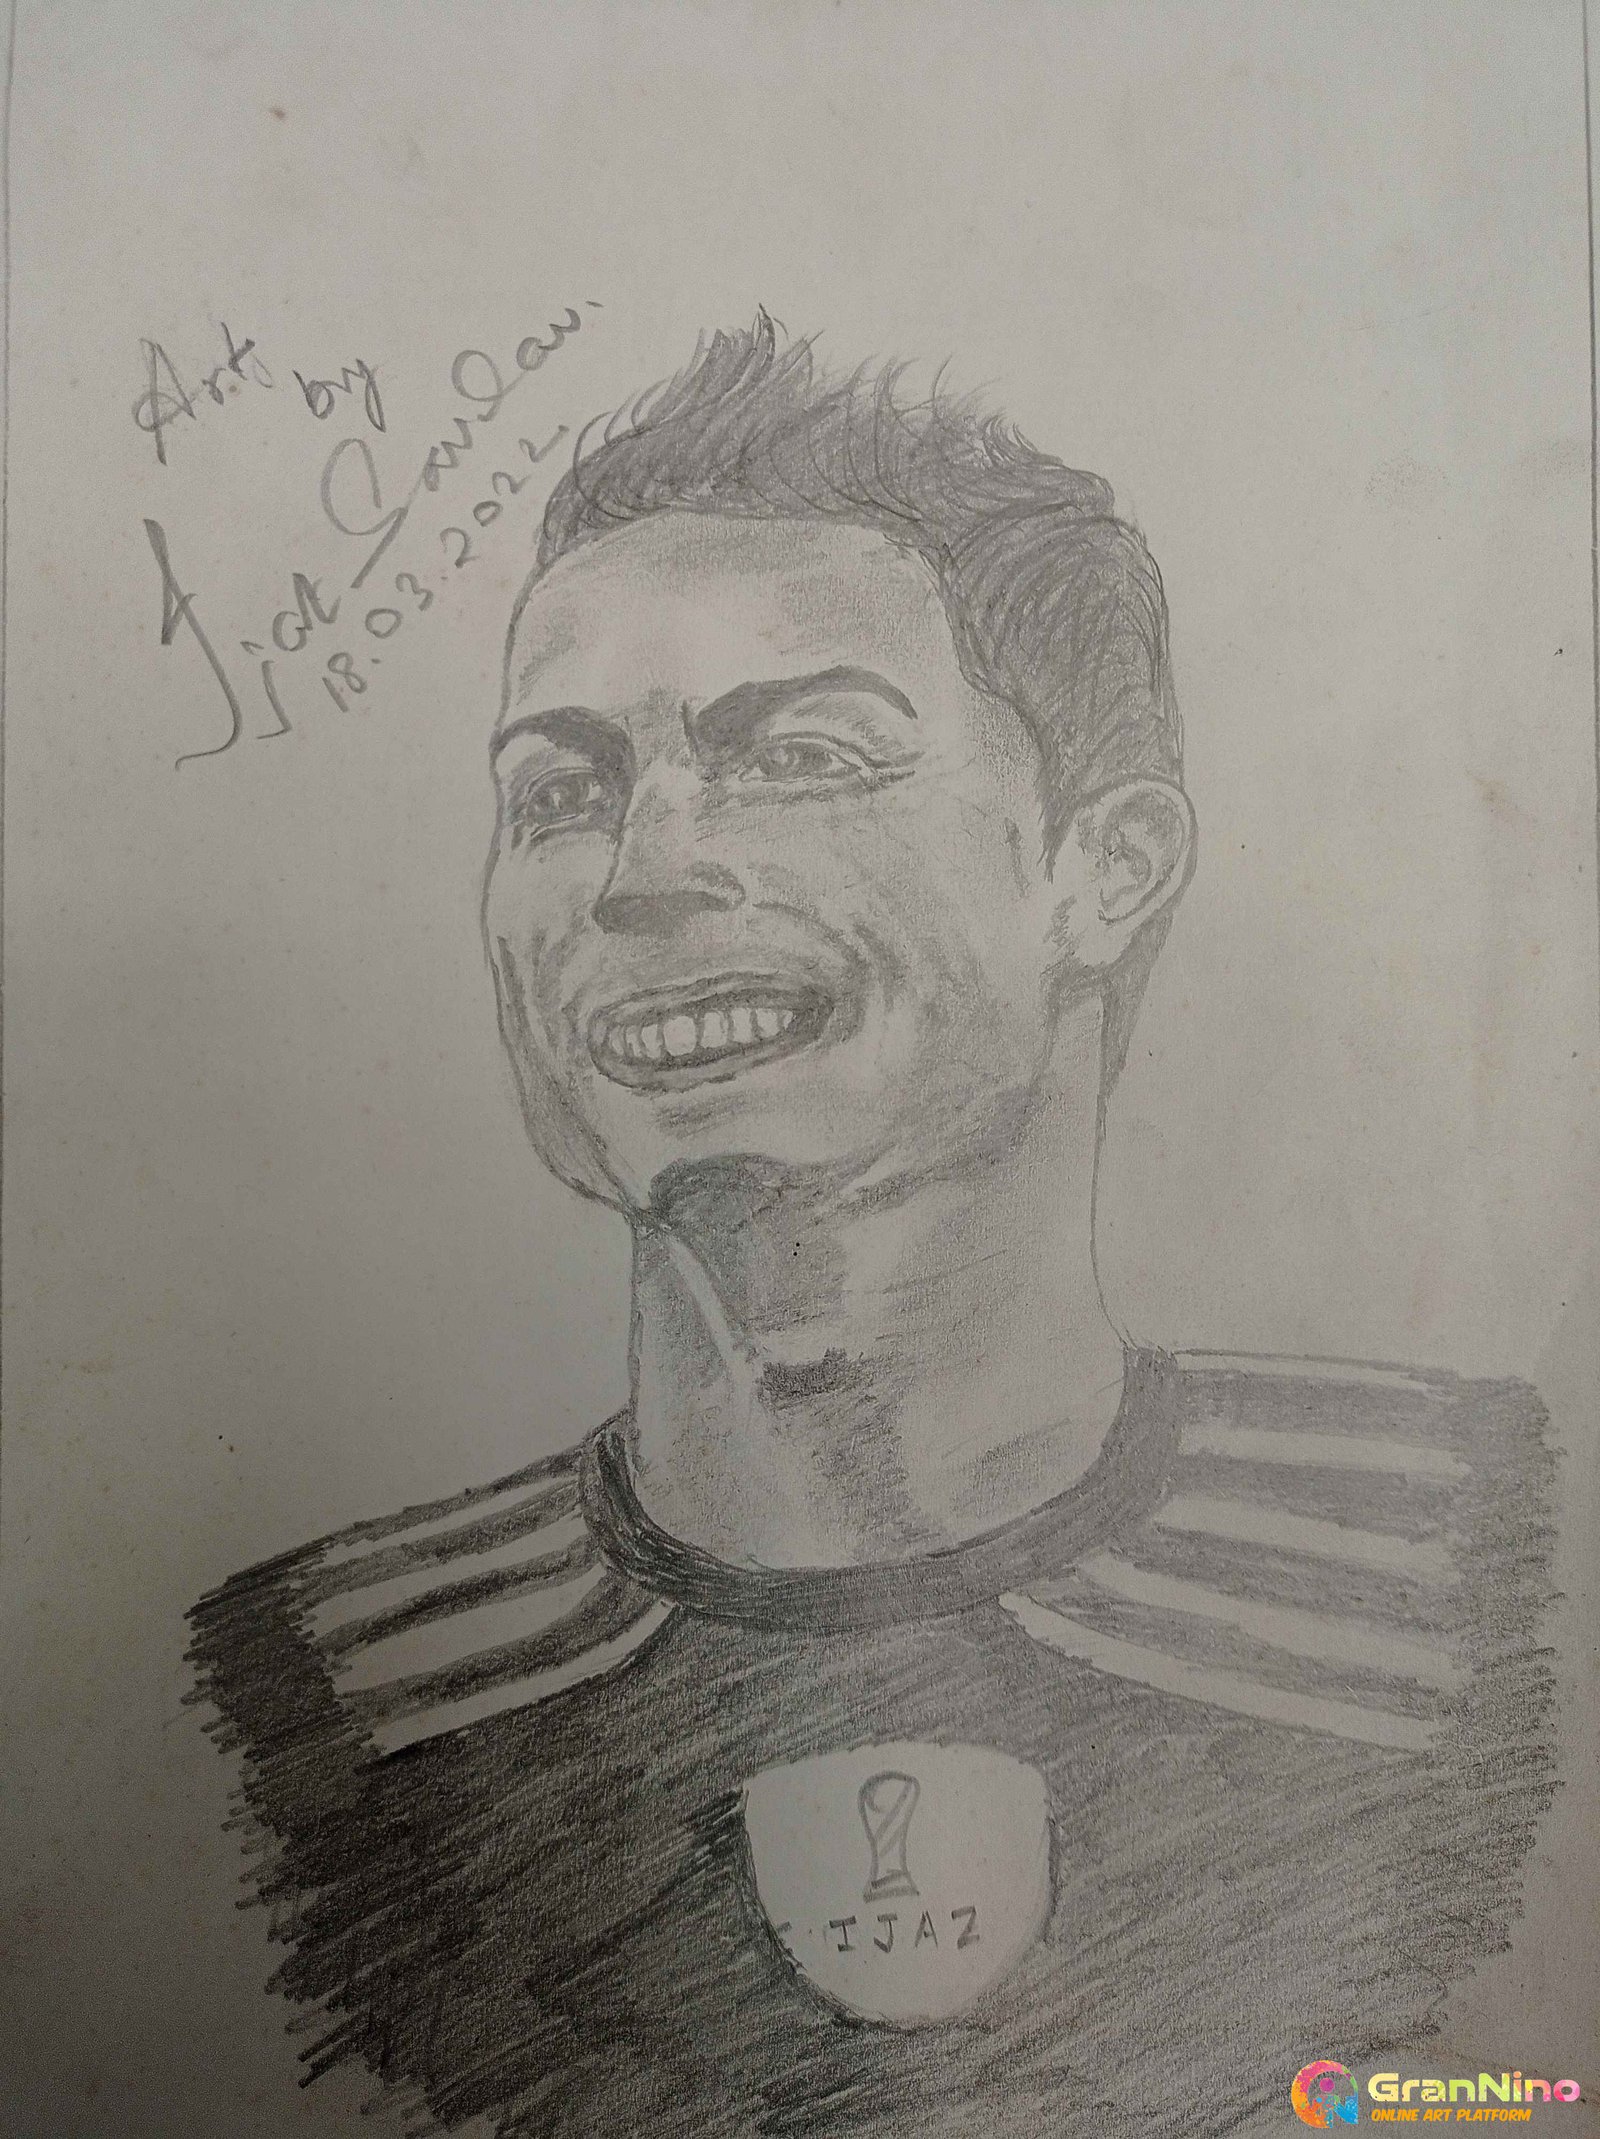 How to Draw Cristiano Ronaldo Cartoon Soccer Player 🎨 - YouTube